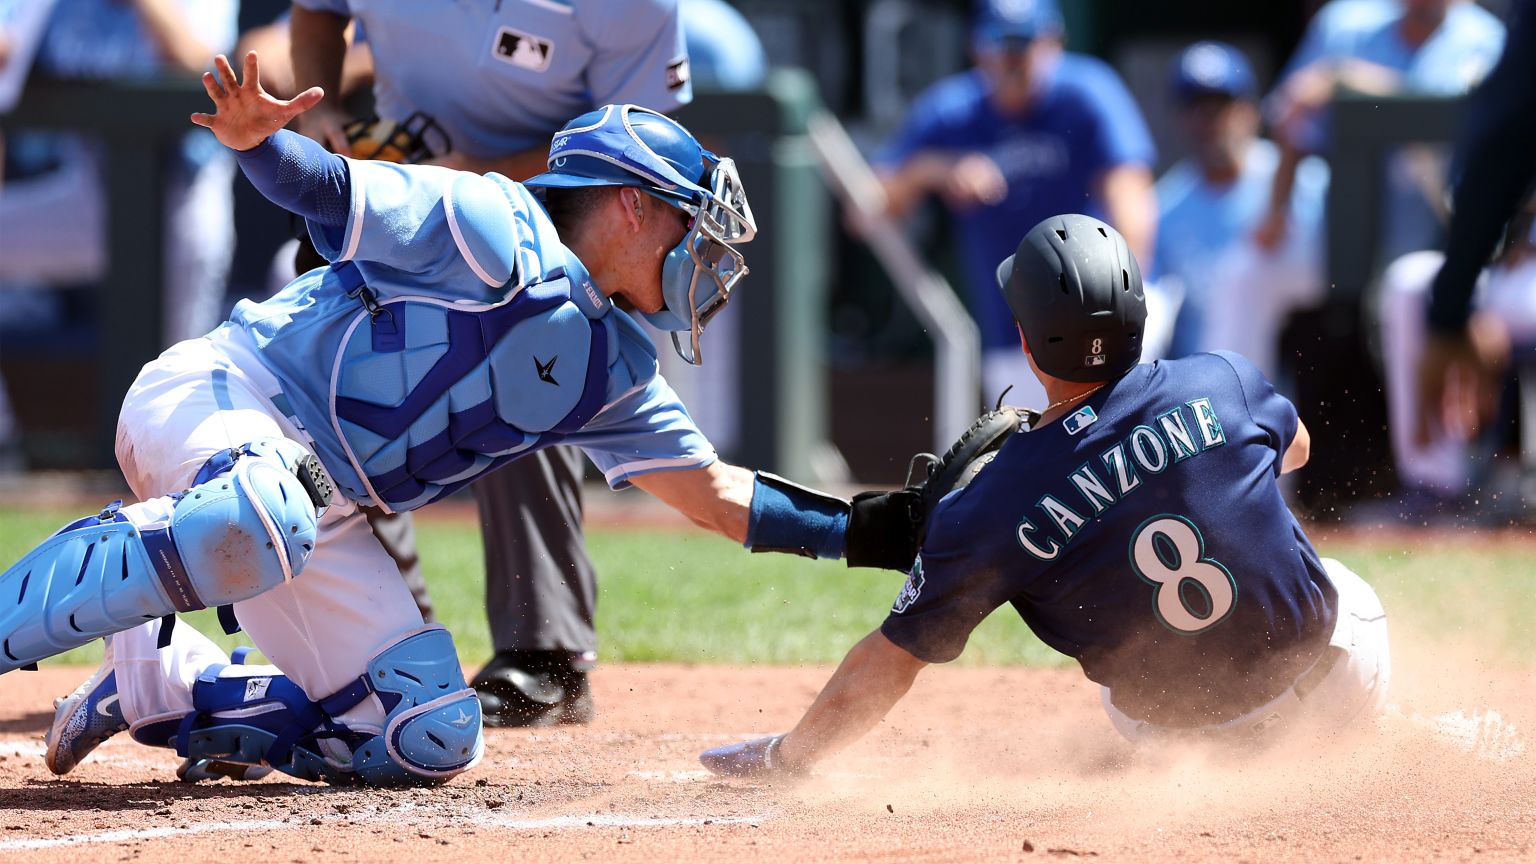 Royals Baseball Images – Browse 610 Stock Photos, Vectors, and Video